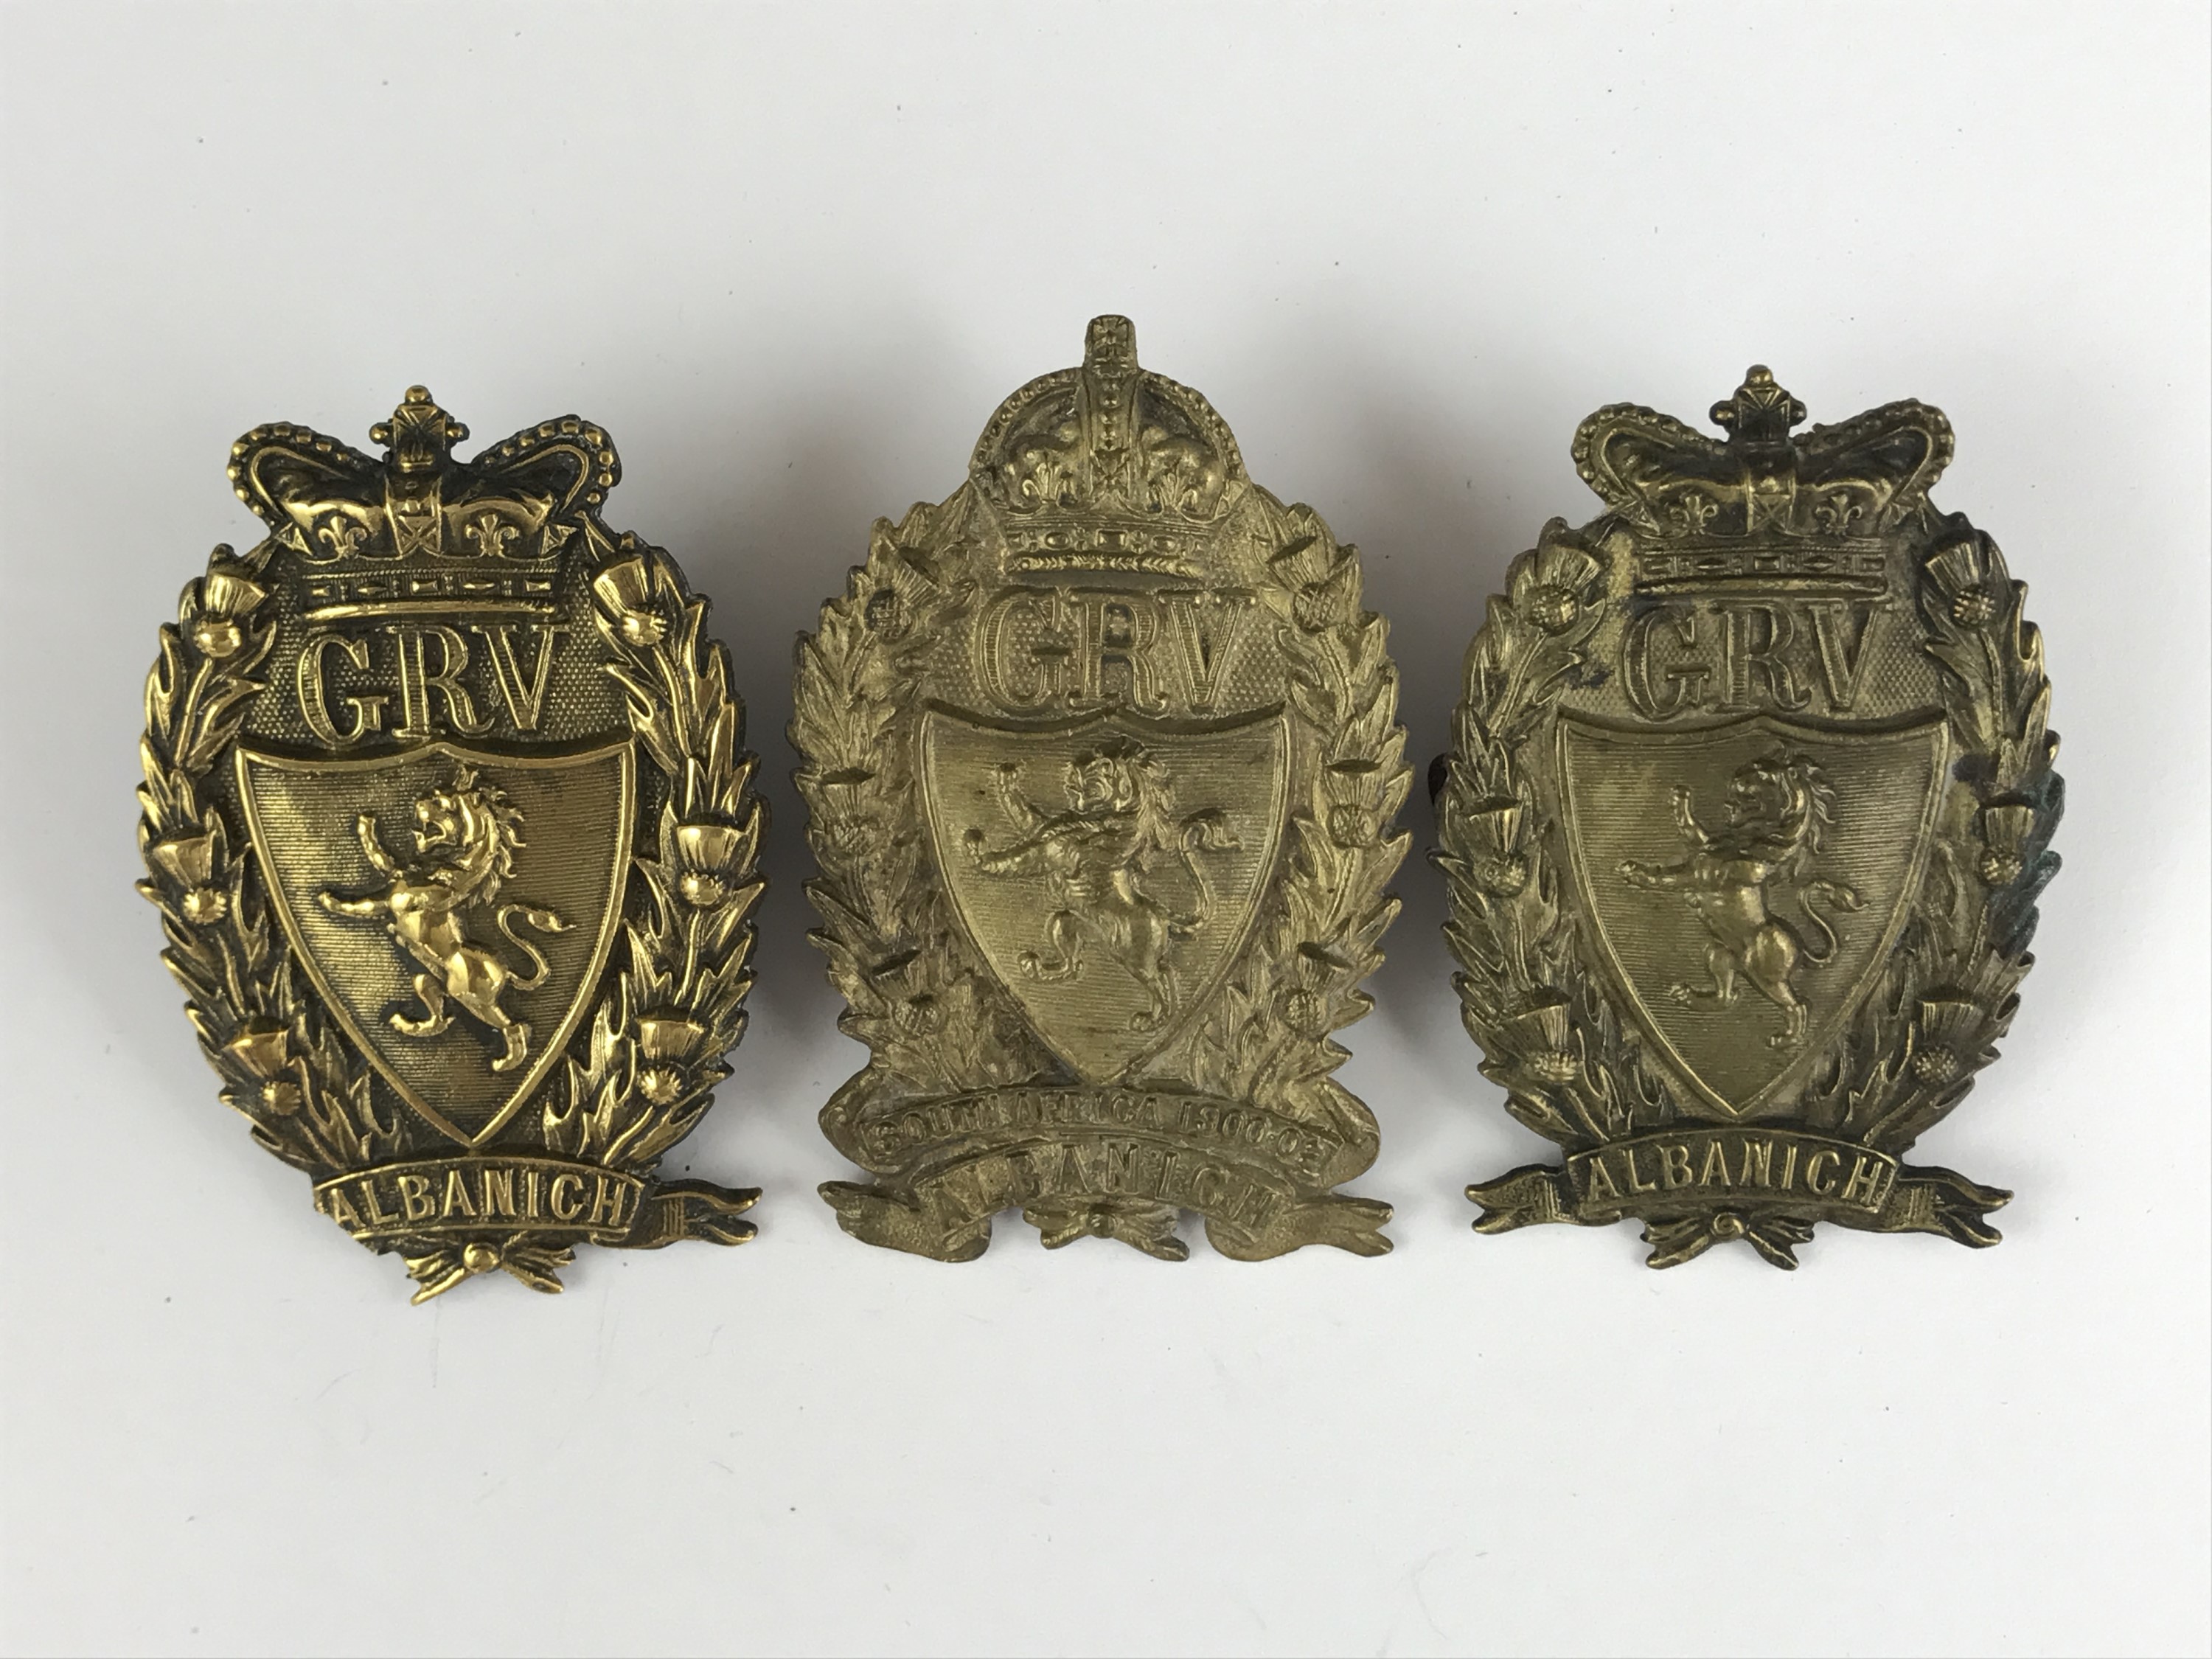 Three Galloway Rifle Volunteers cap badges